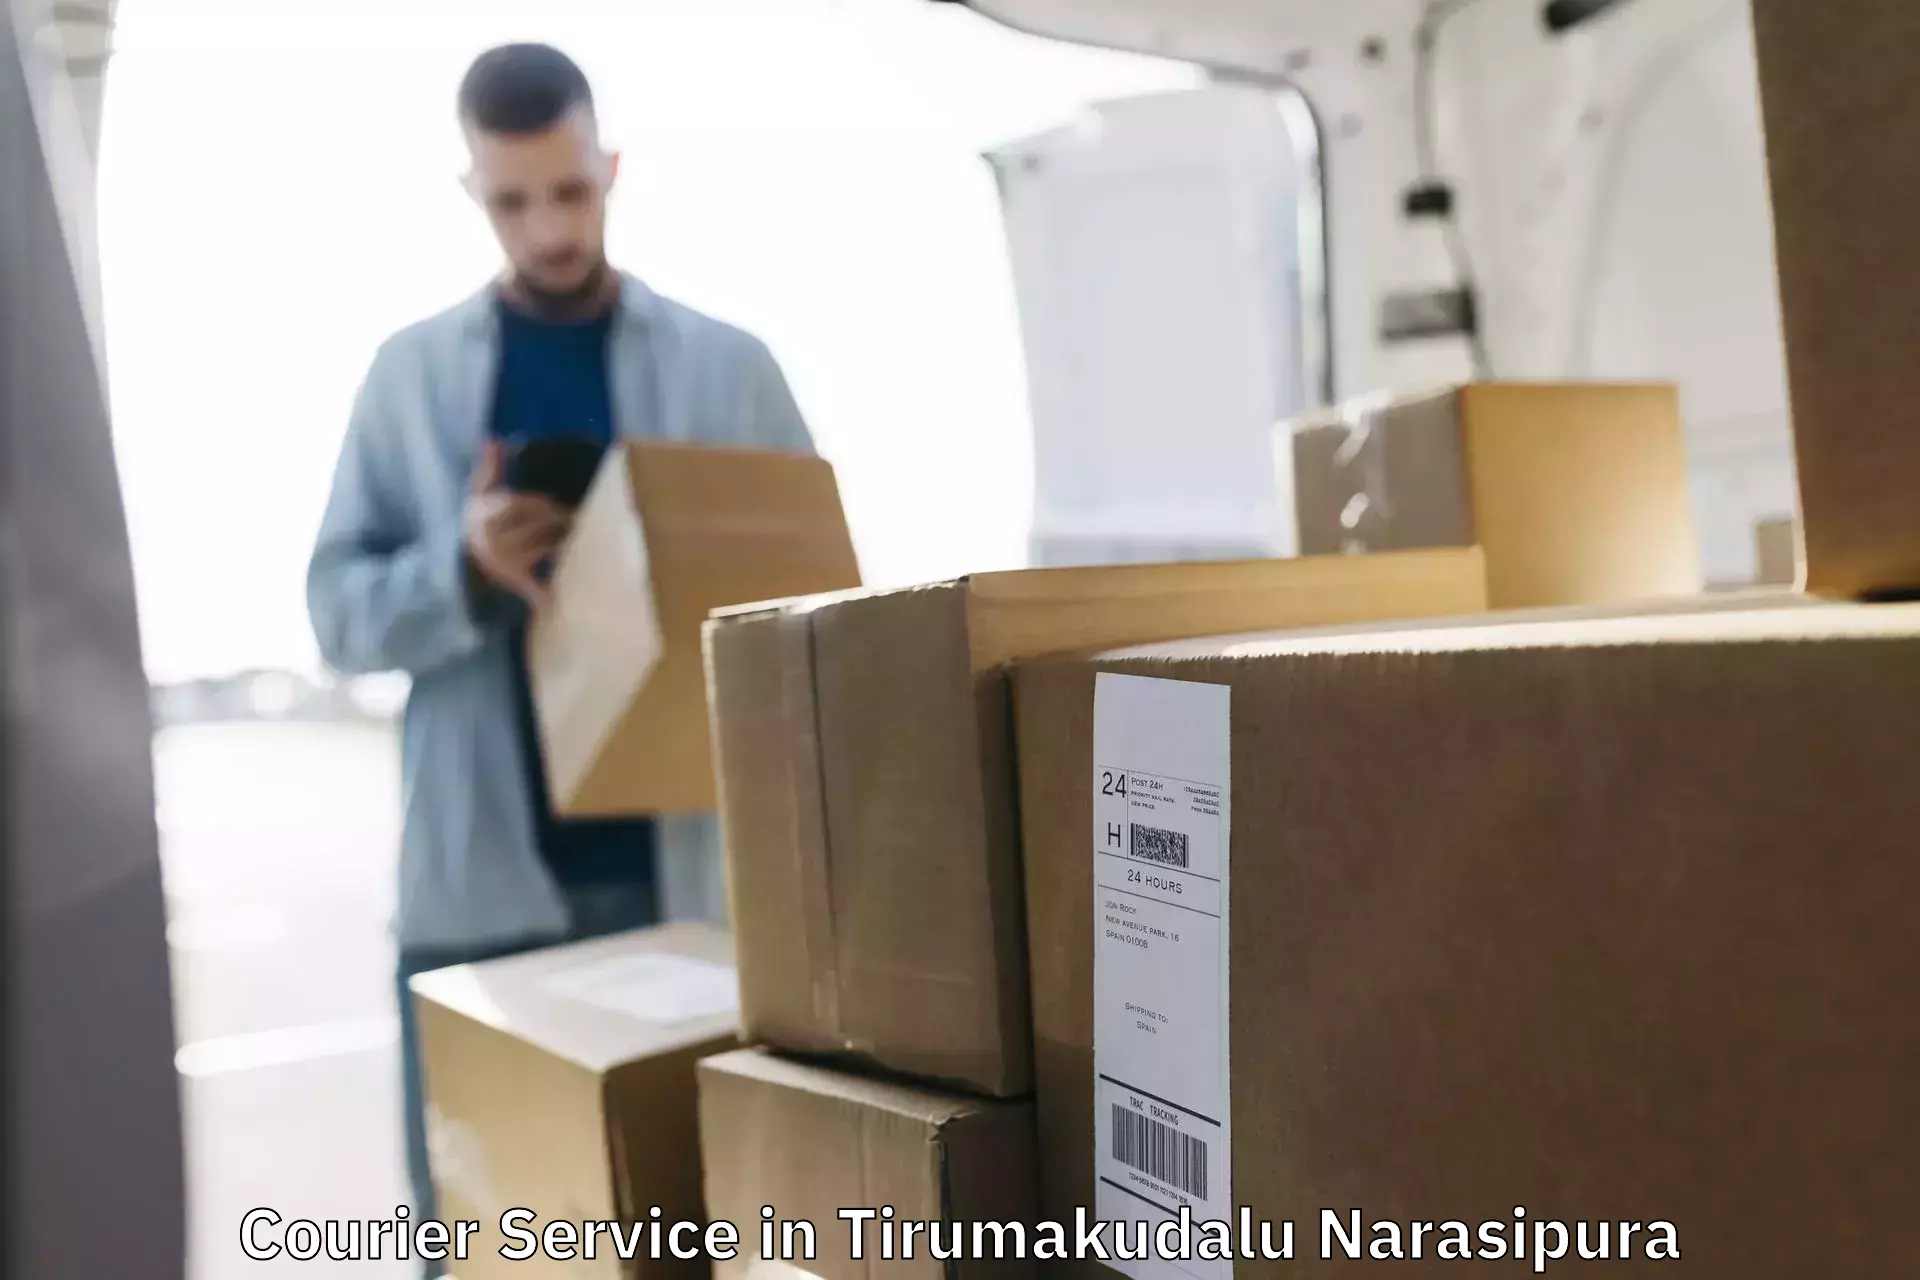 Streamlined delivery processes in Tirumakudalu Narasipura